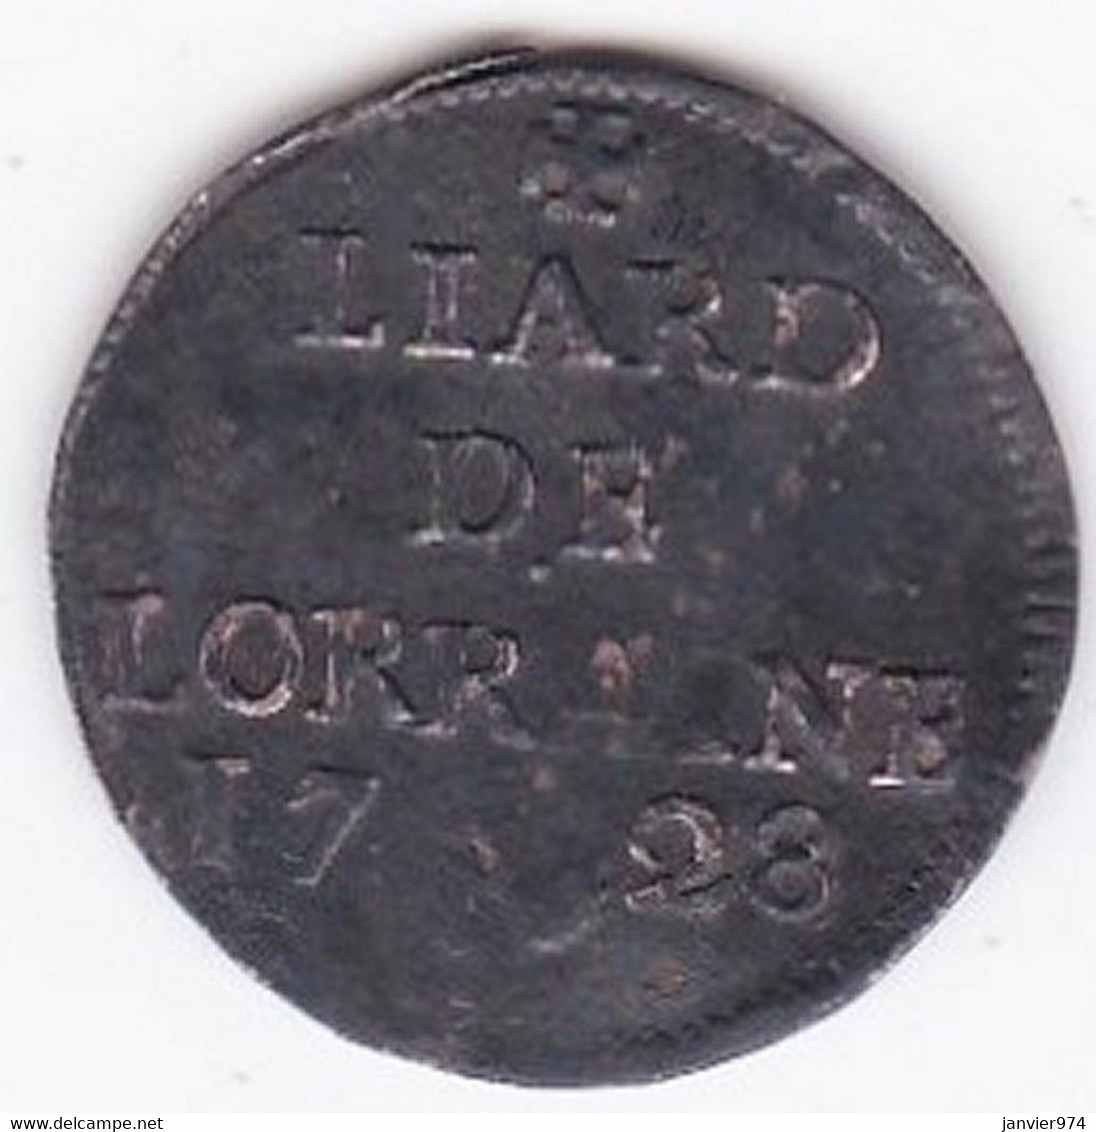 DUCHÉ DE LORRAINE . LIARD DE LORRAINE 1728 , LÉOPOLD Ier - Lorraine